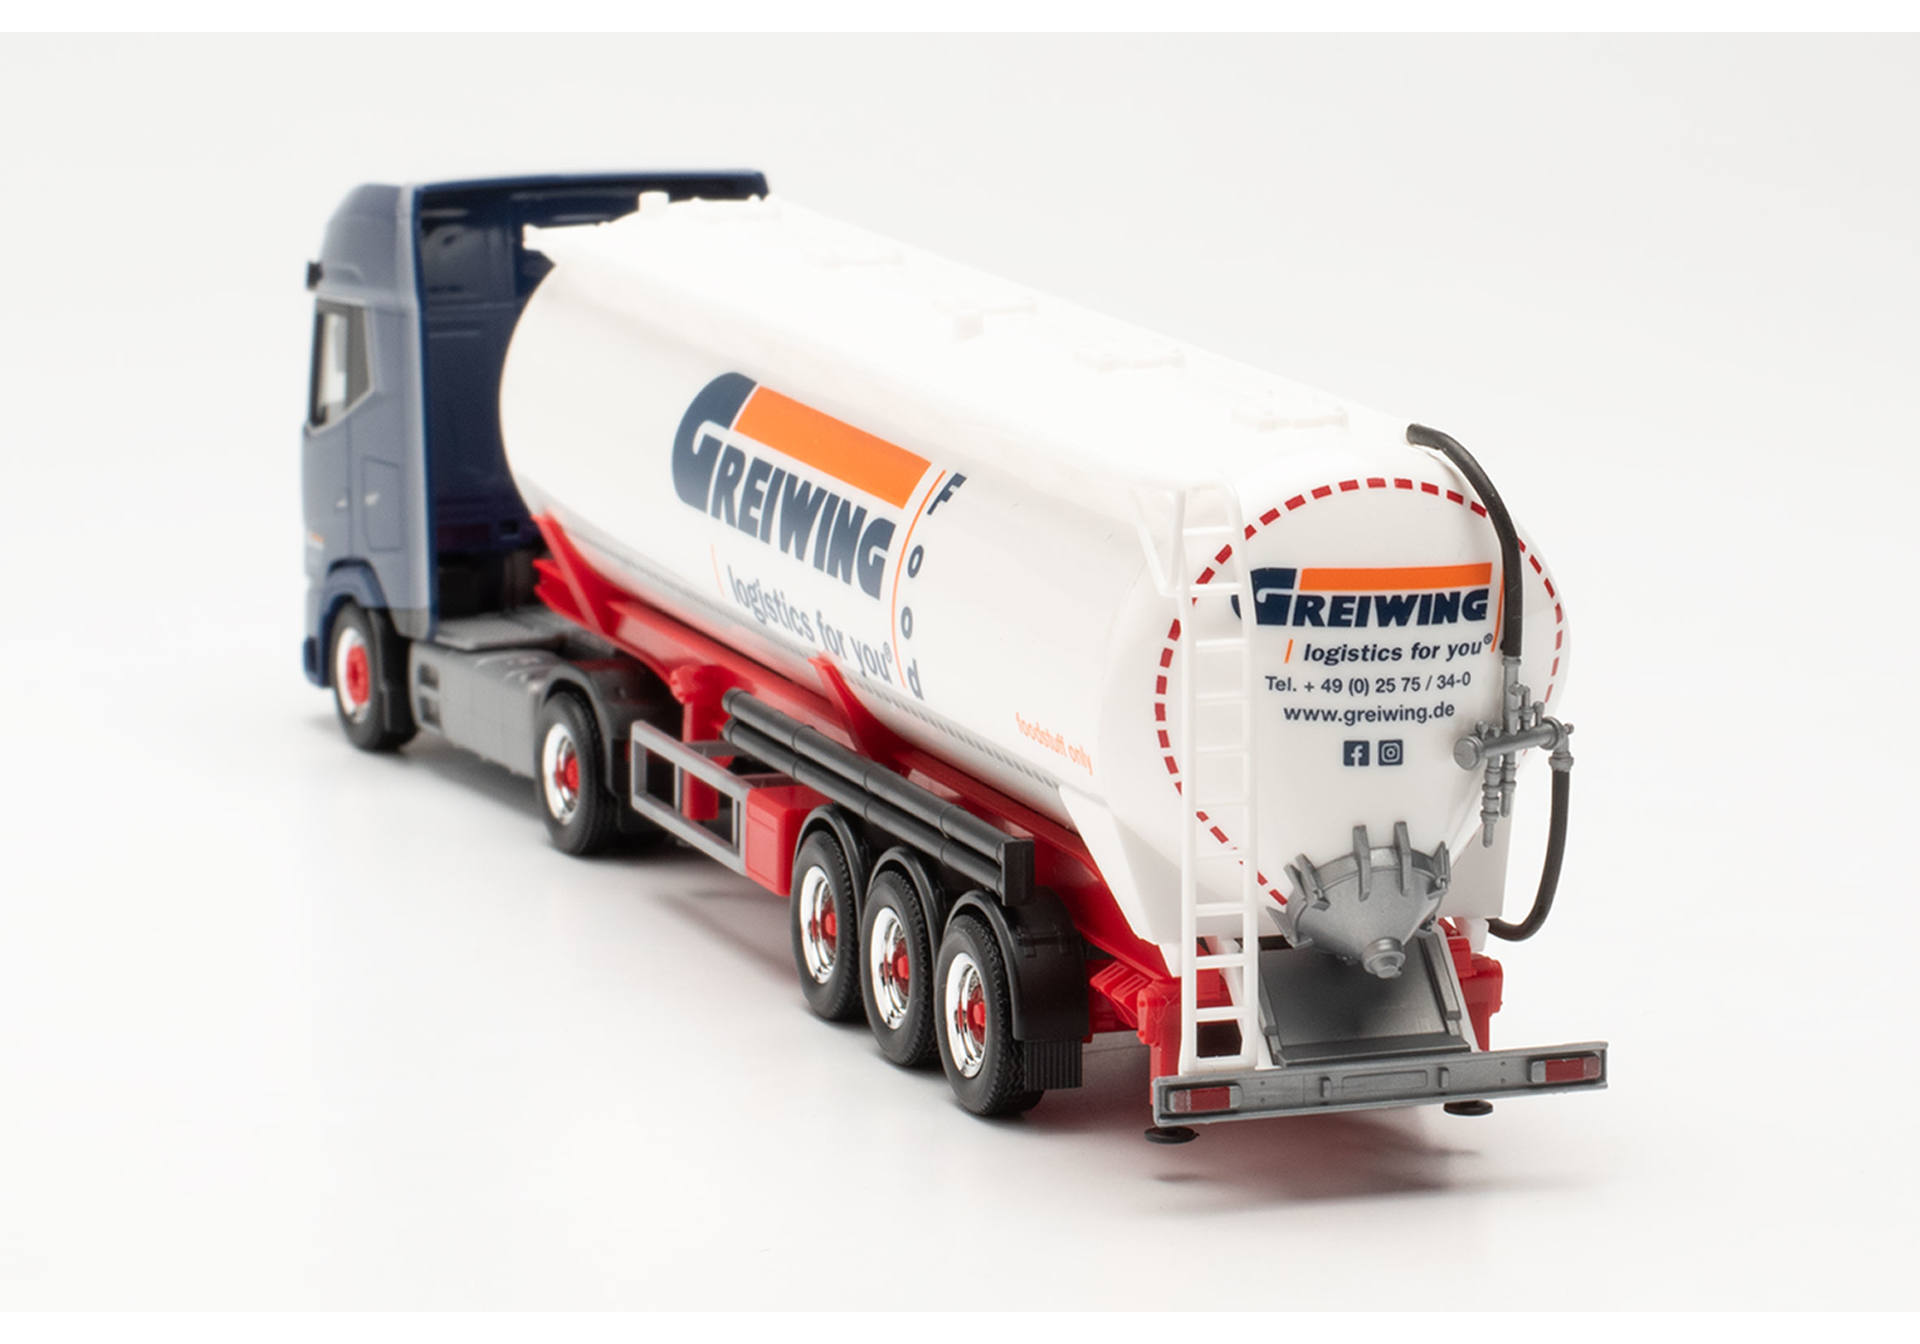 DAF XG Plus HD silo semitrailer truck Feldbinder 60m³ Food „Greiwing”